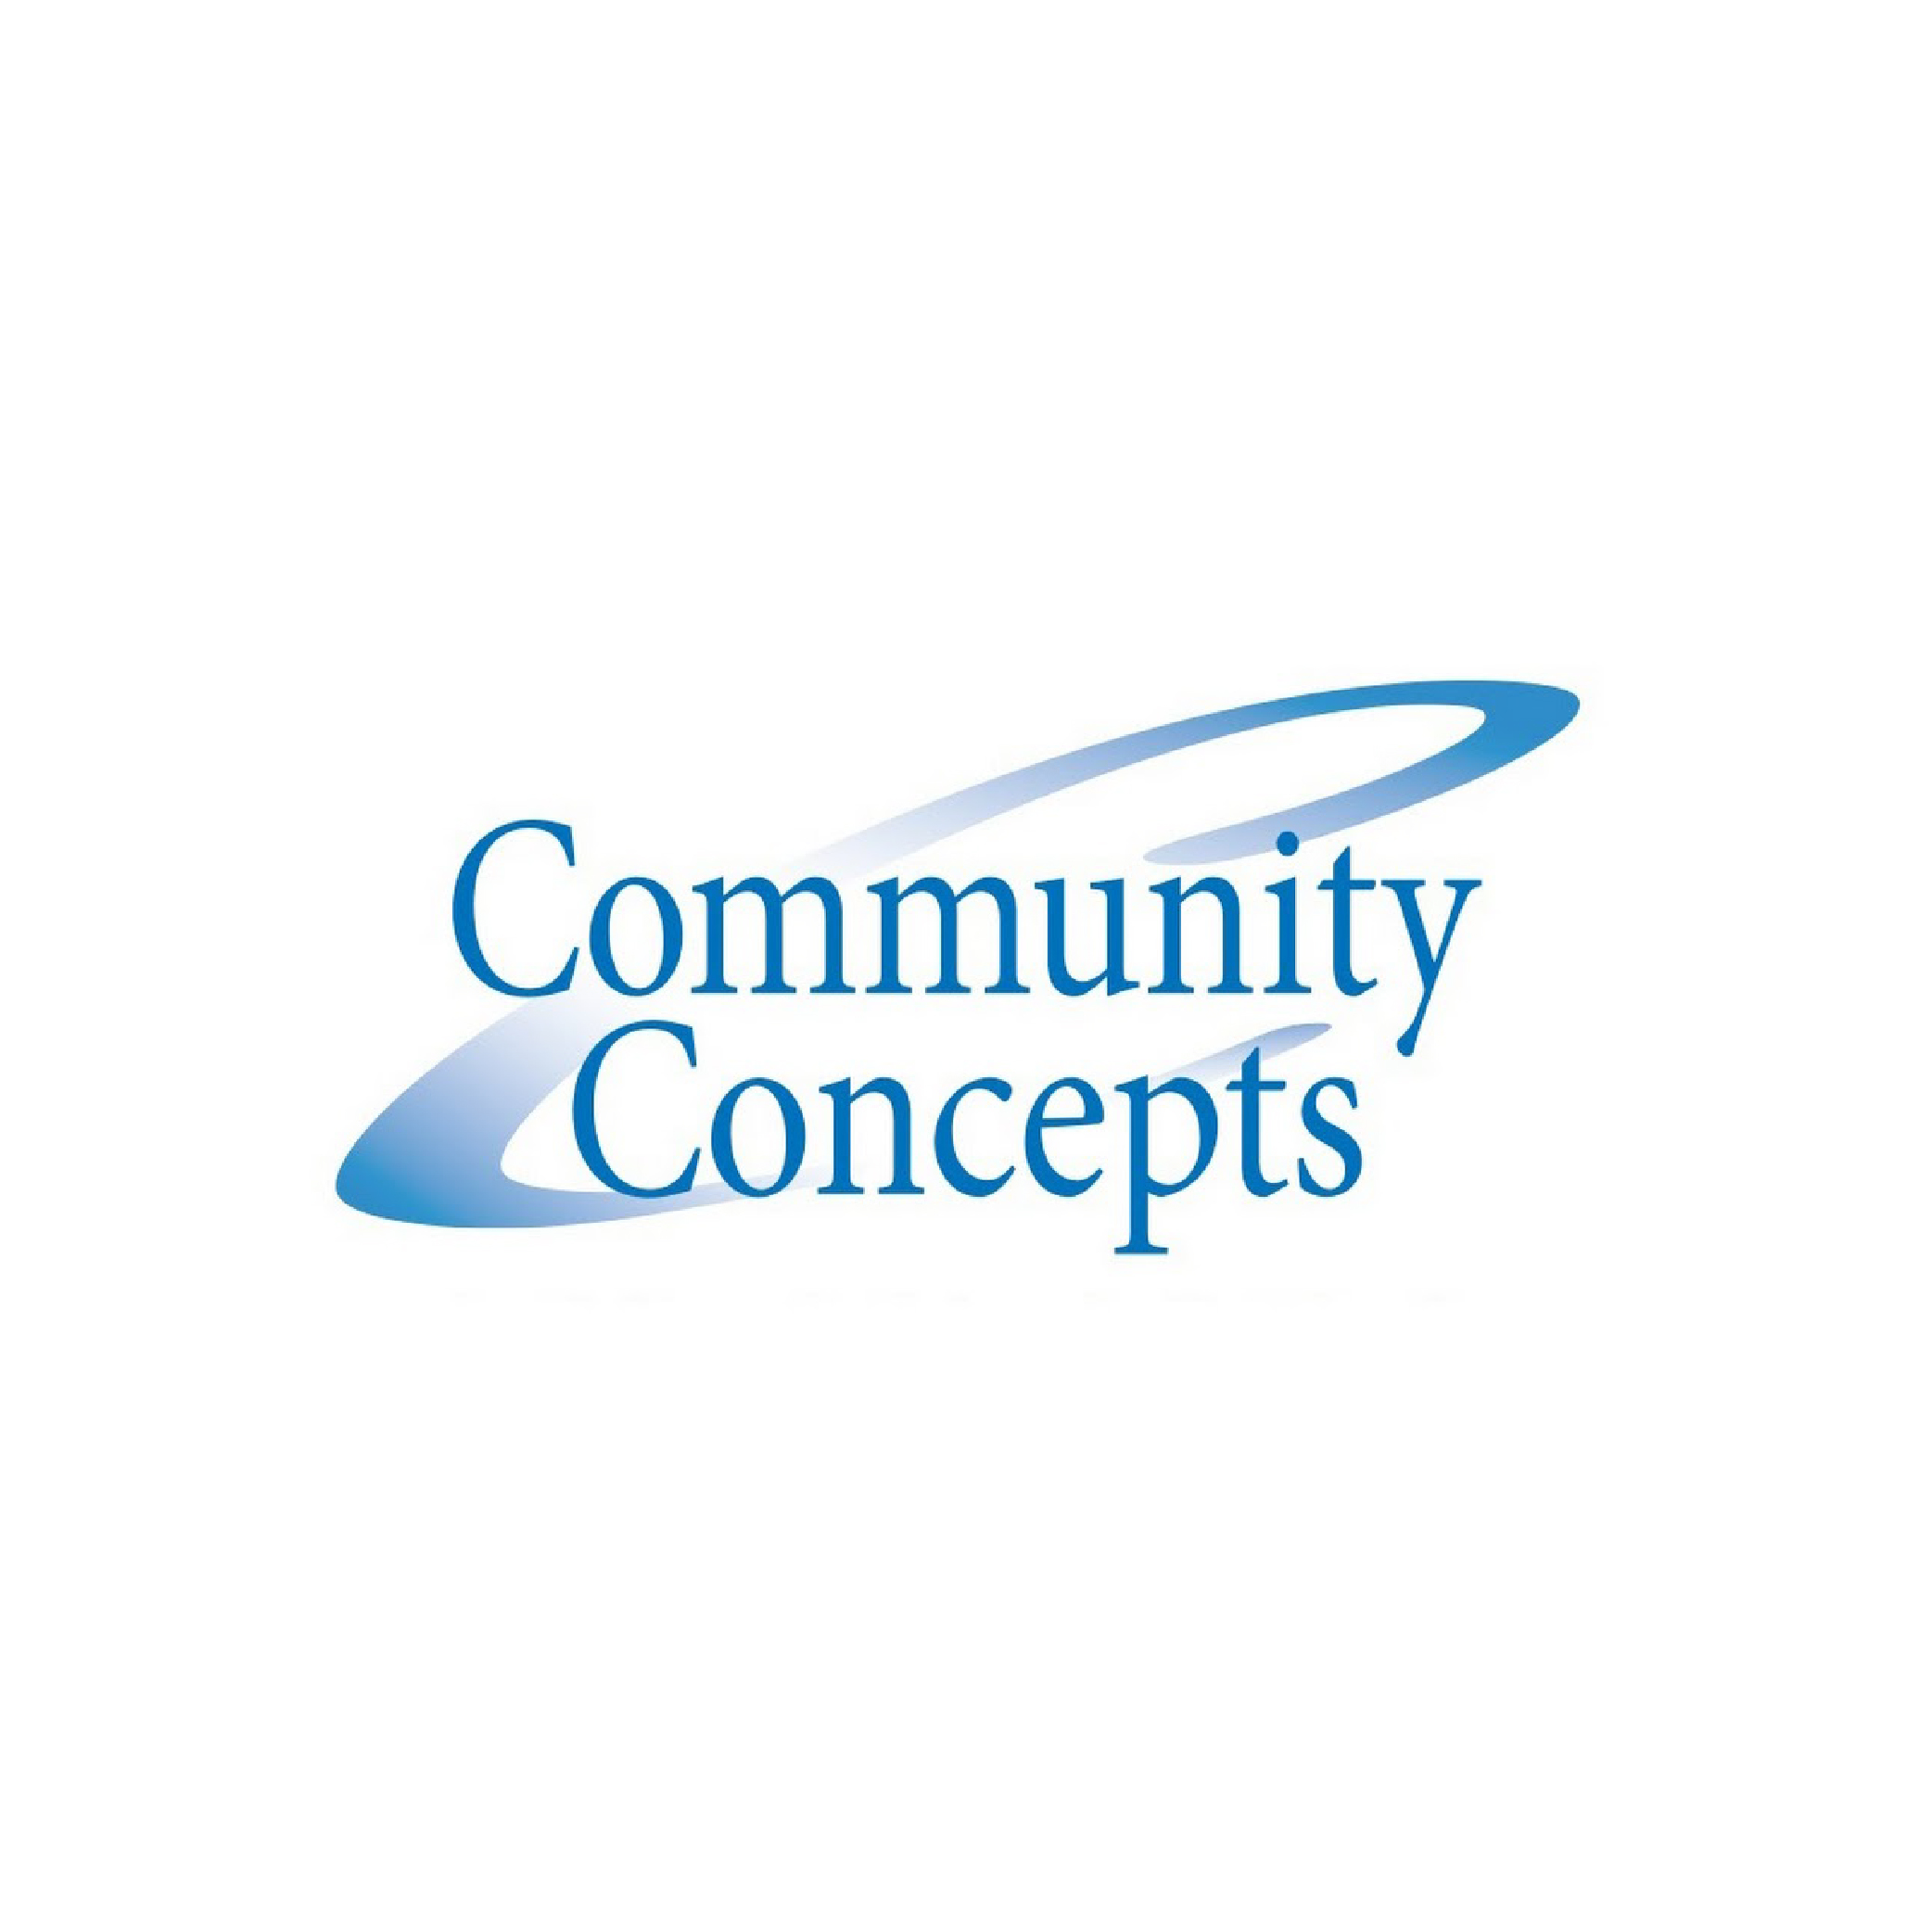 Community Concepts logo